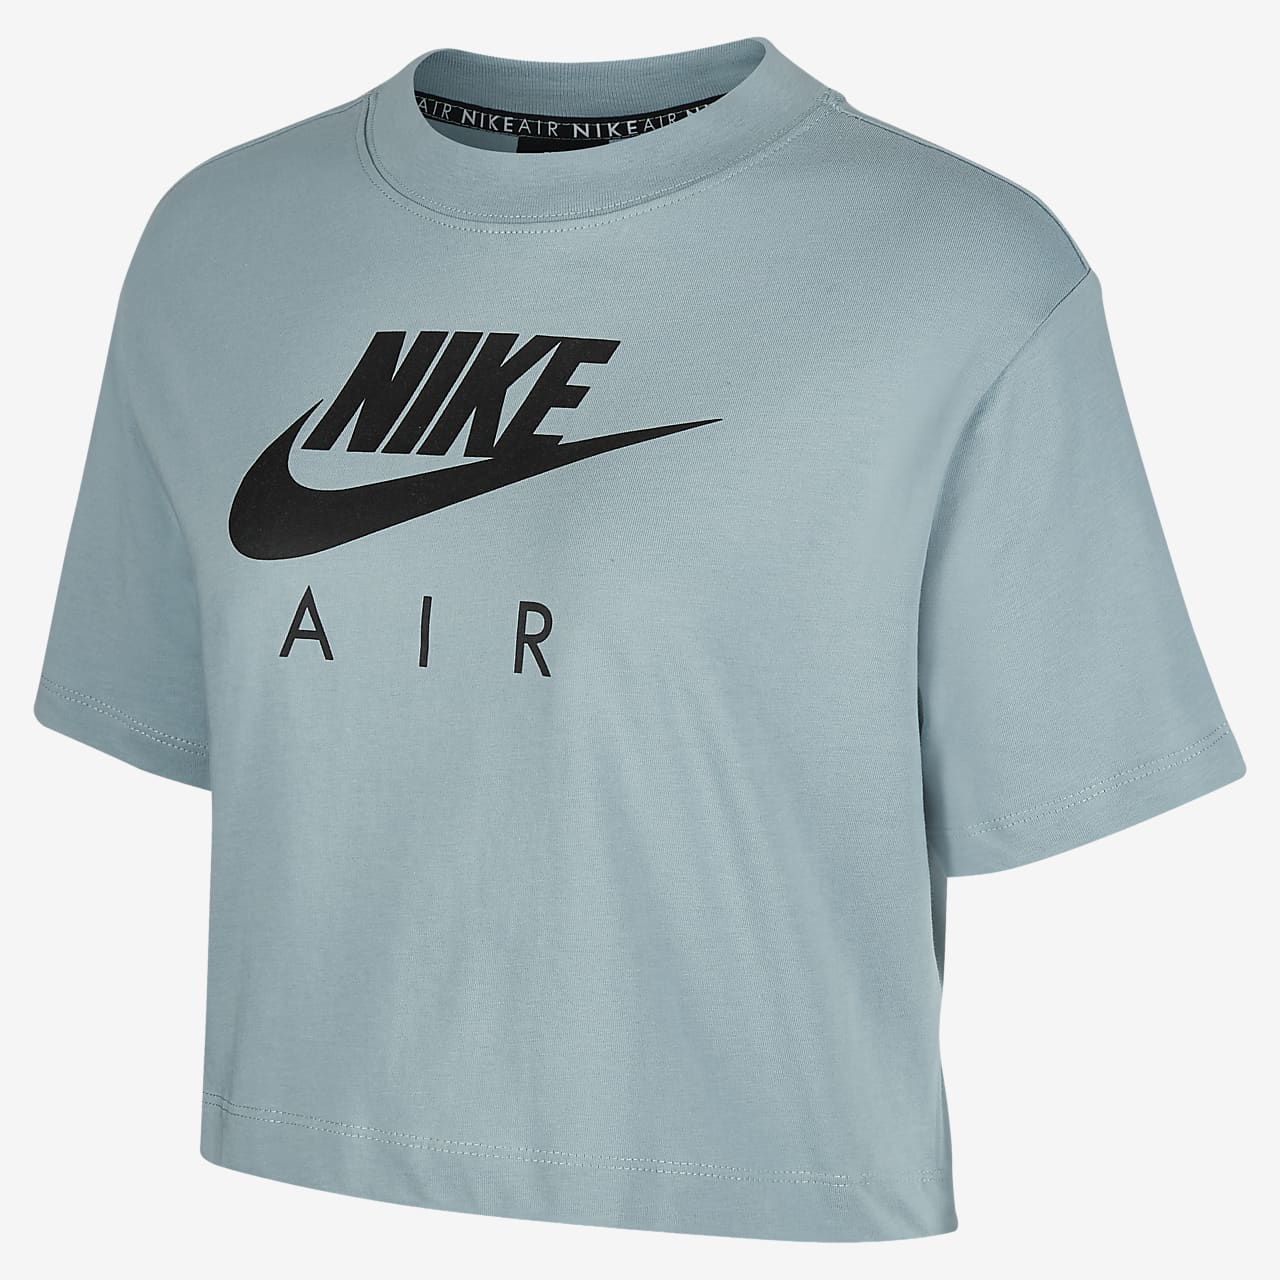 Nike Air Women's Short-Sleeve Top. Nike PH